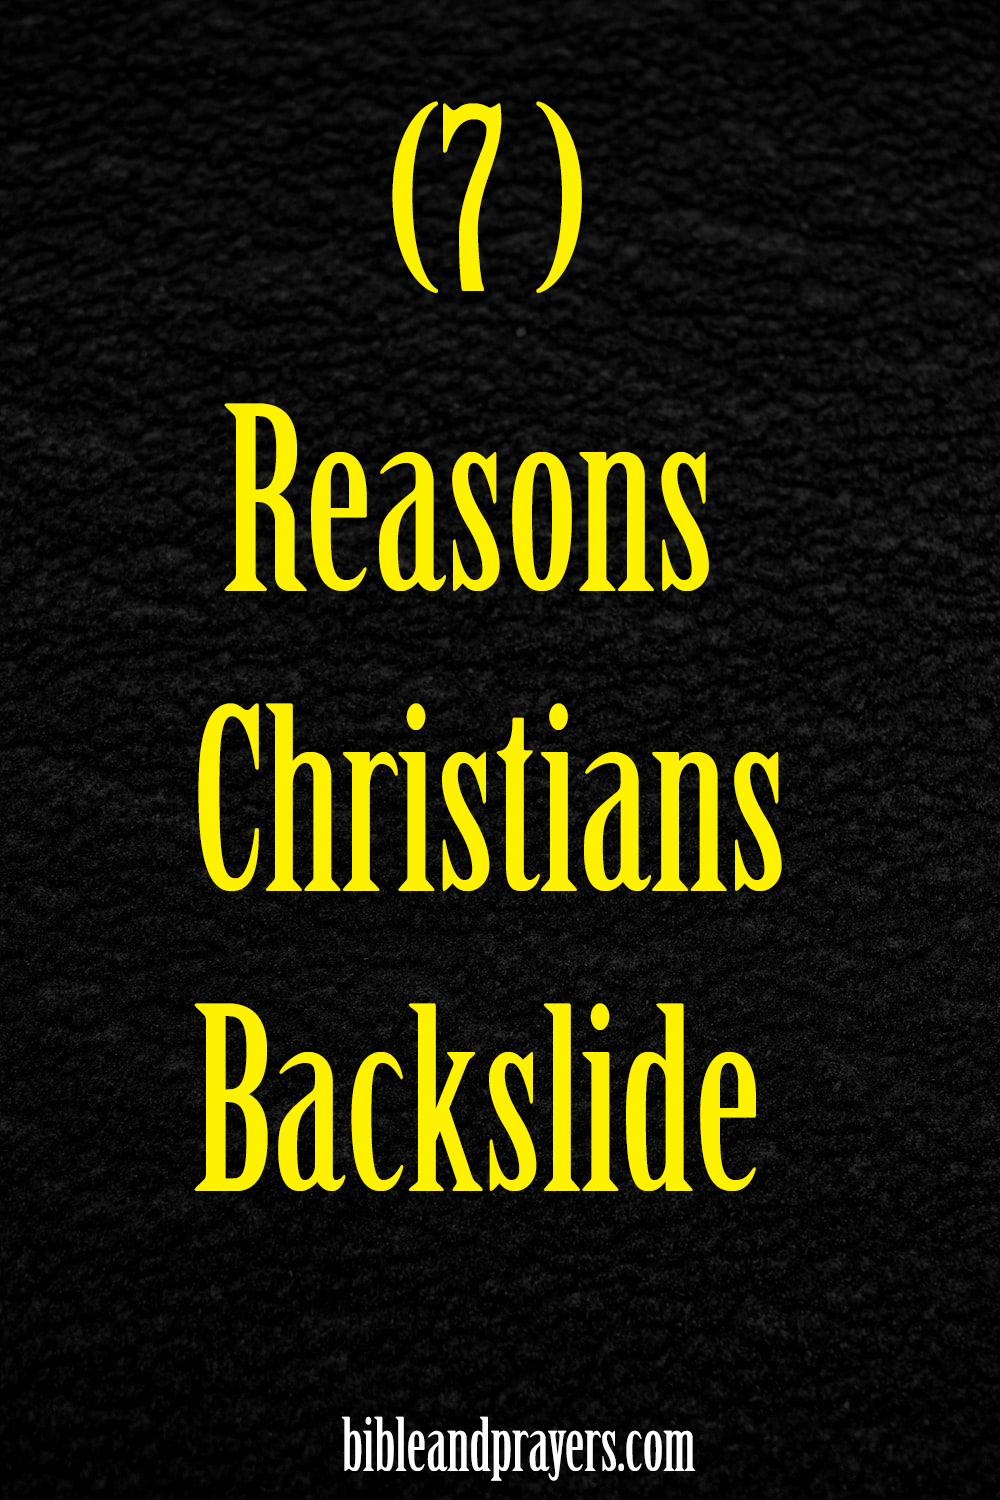 7 Reasons Christians Backslide